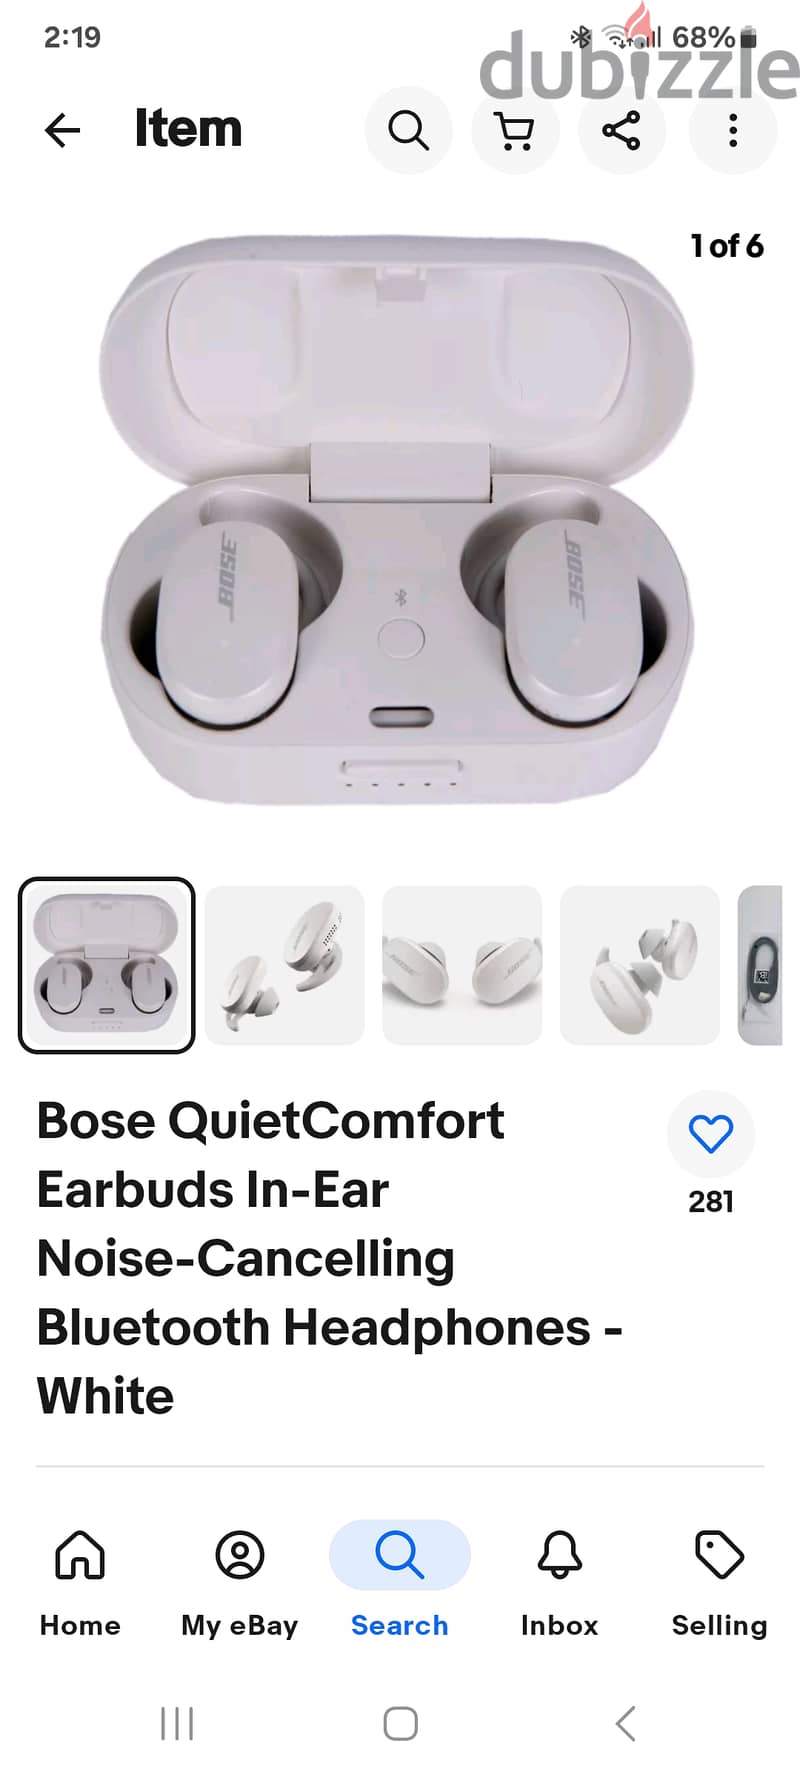 Bose QuietComfort bargain price  unwanted Xmas gift 11